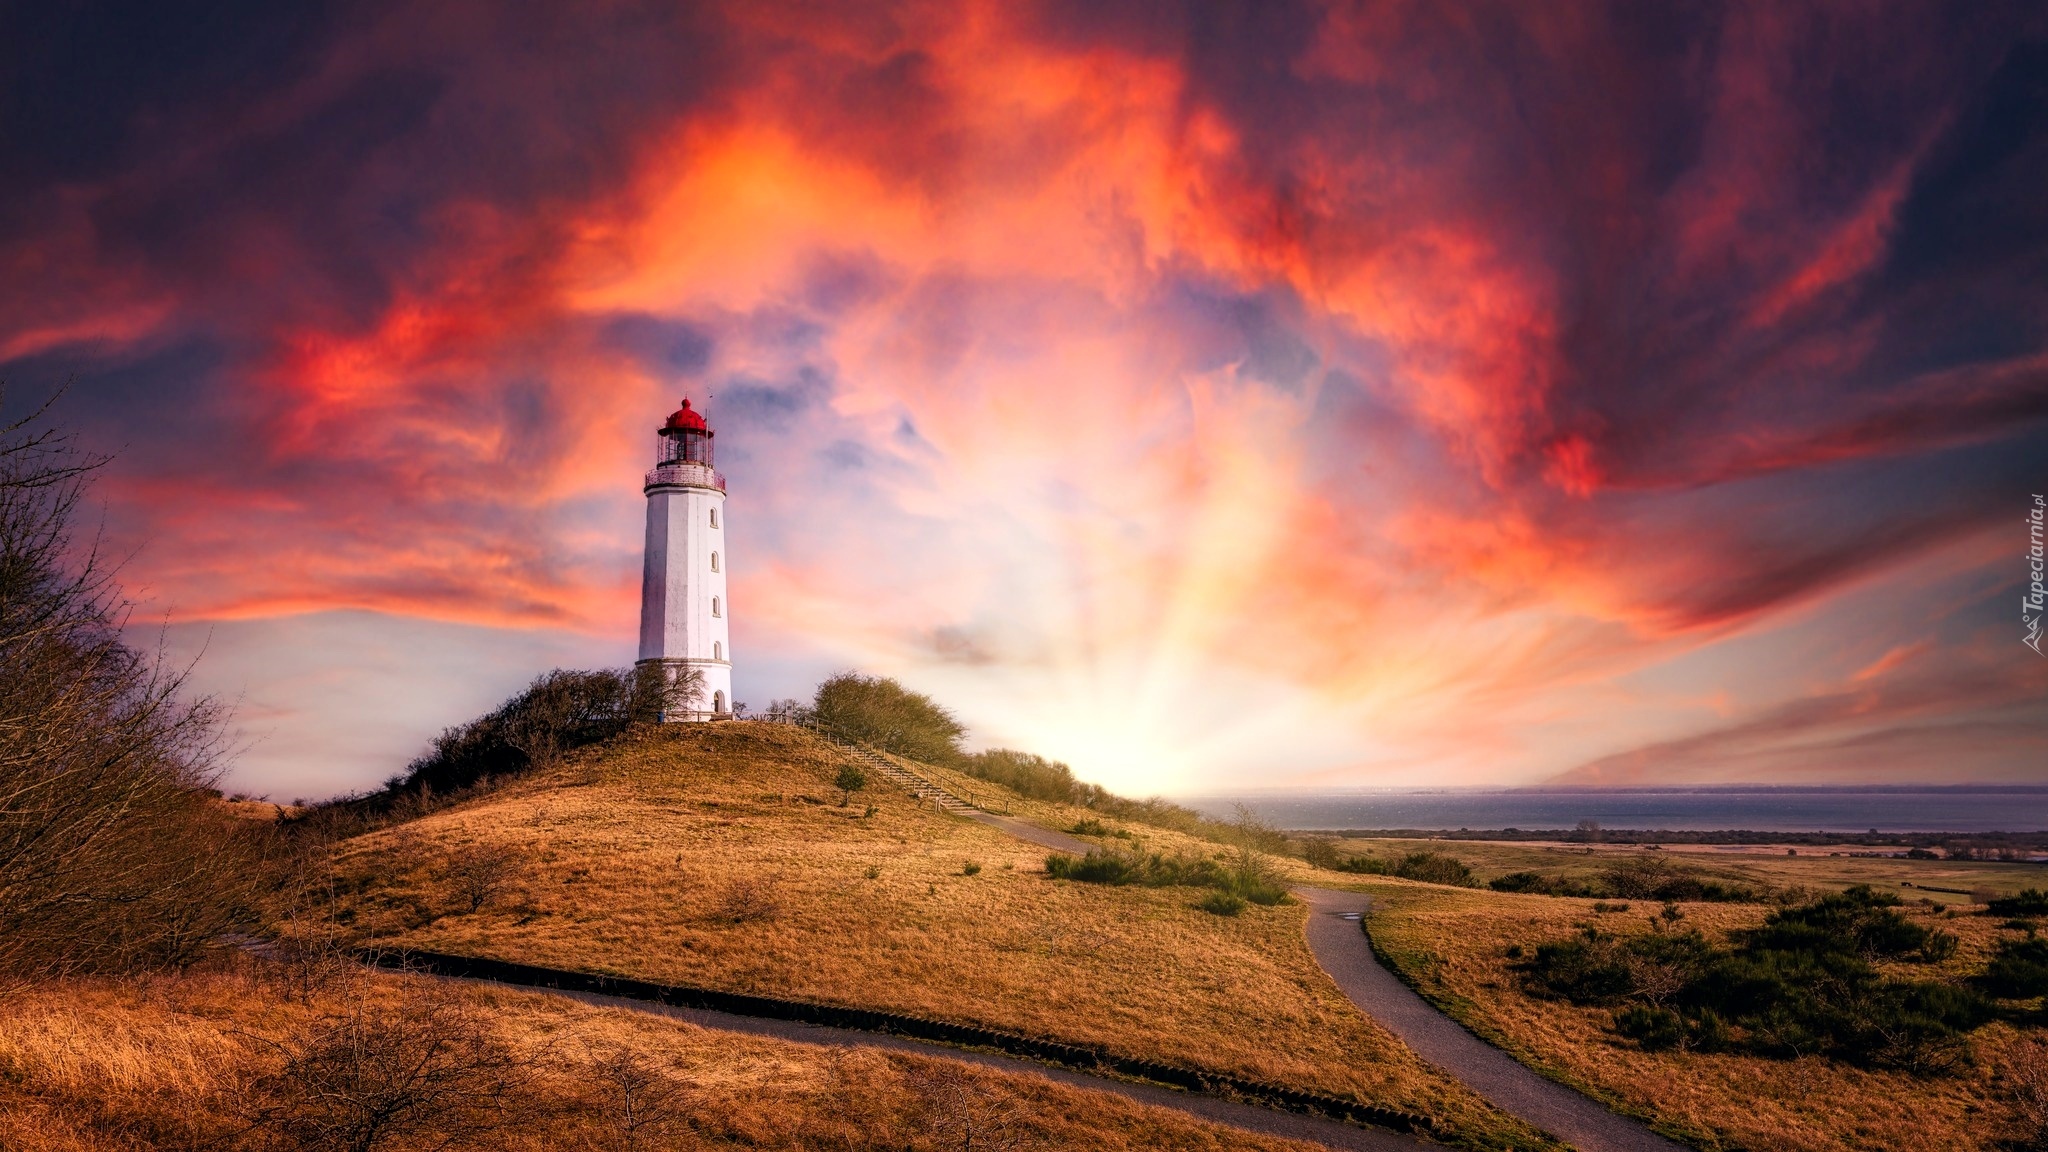 Latarnia morska, Dornbusch Lighthouse, Zachód słońca, Chmury, Hiddensee, Niemcy